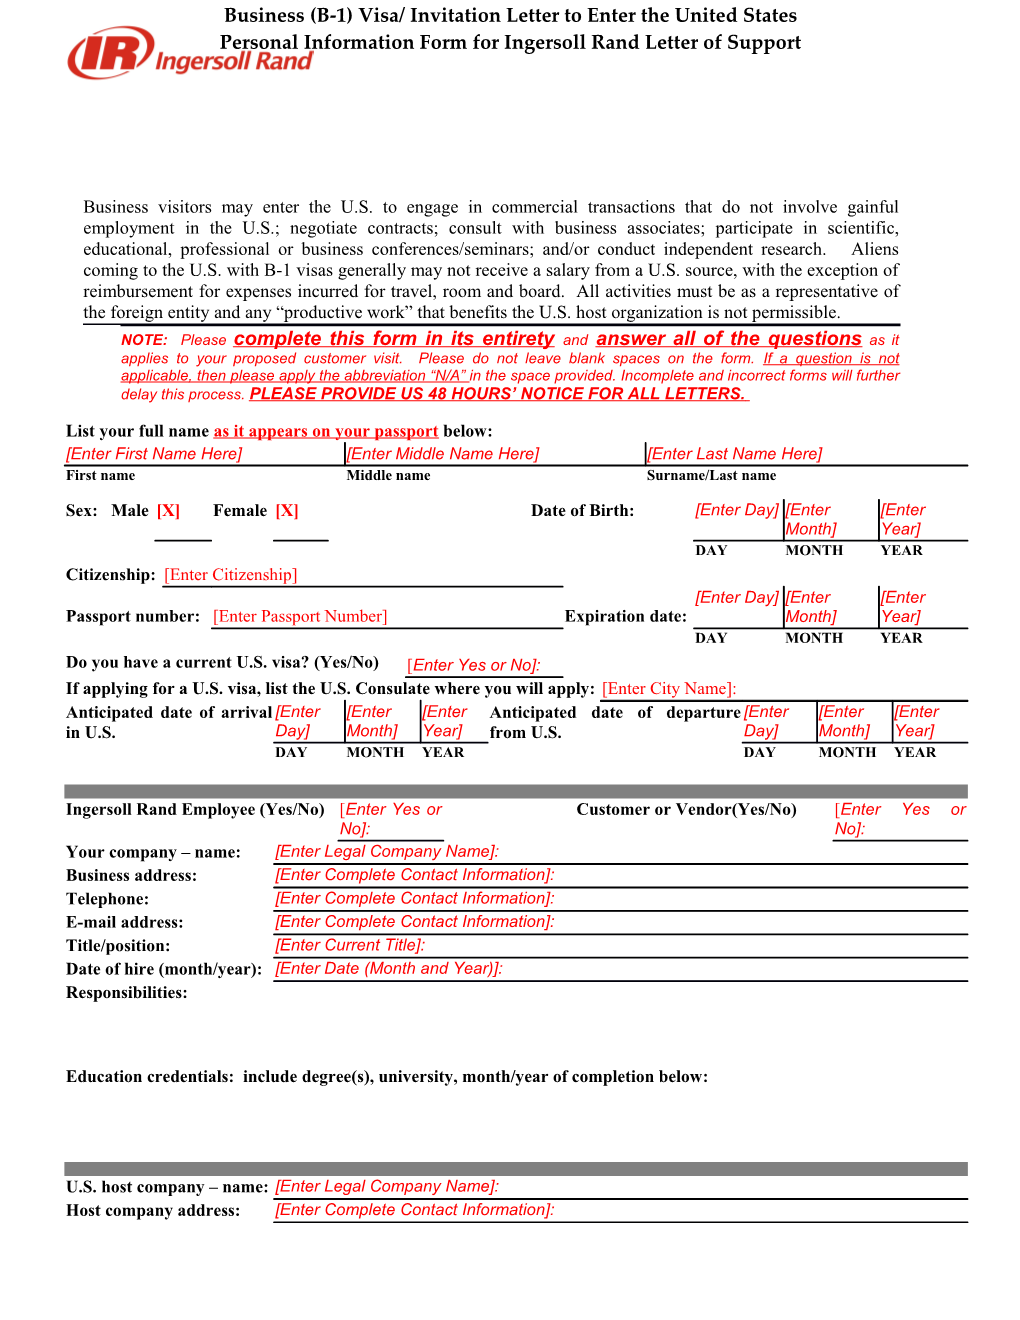 Business Visa Or Invitation Letter Form - Travel to US 3.11.13